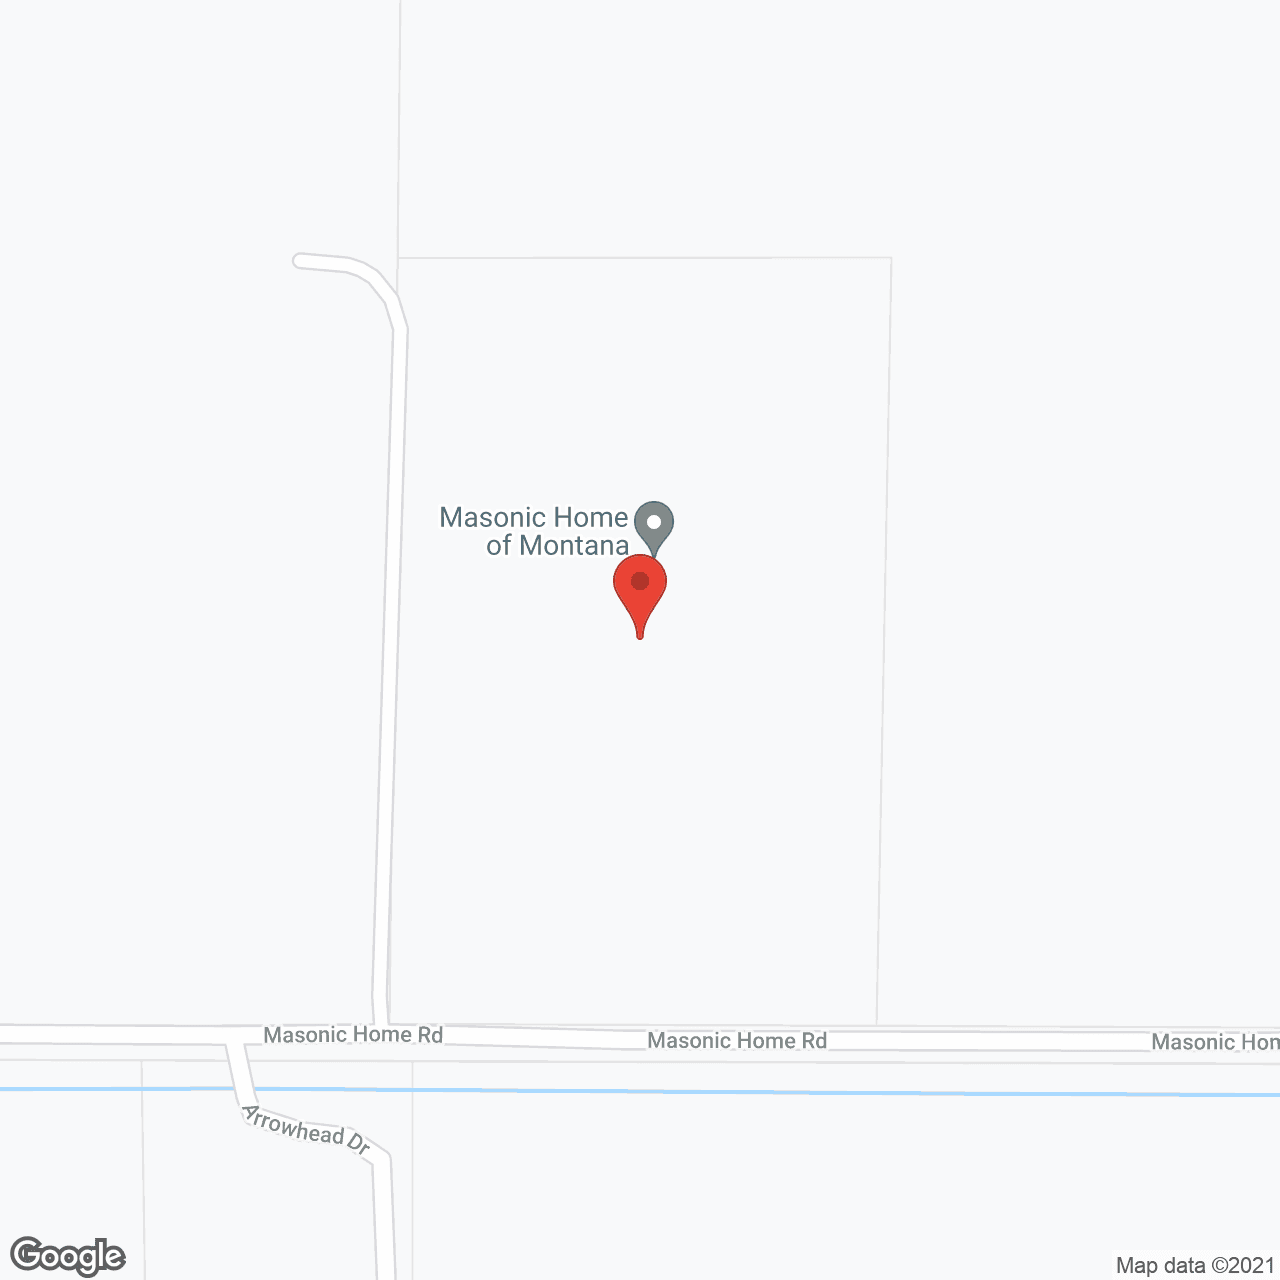 Masonic Home of Montana in google map